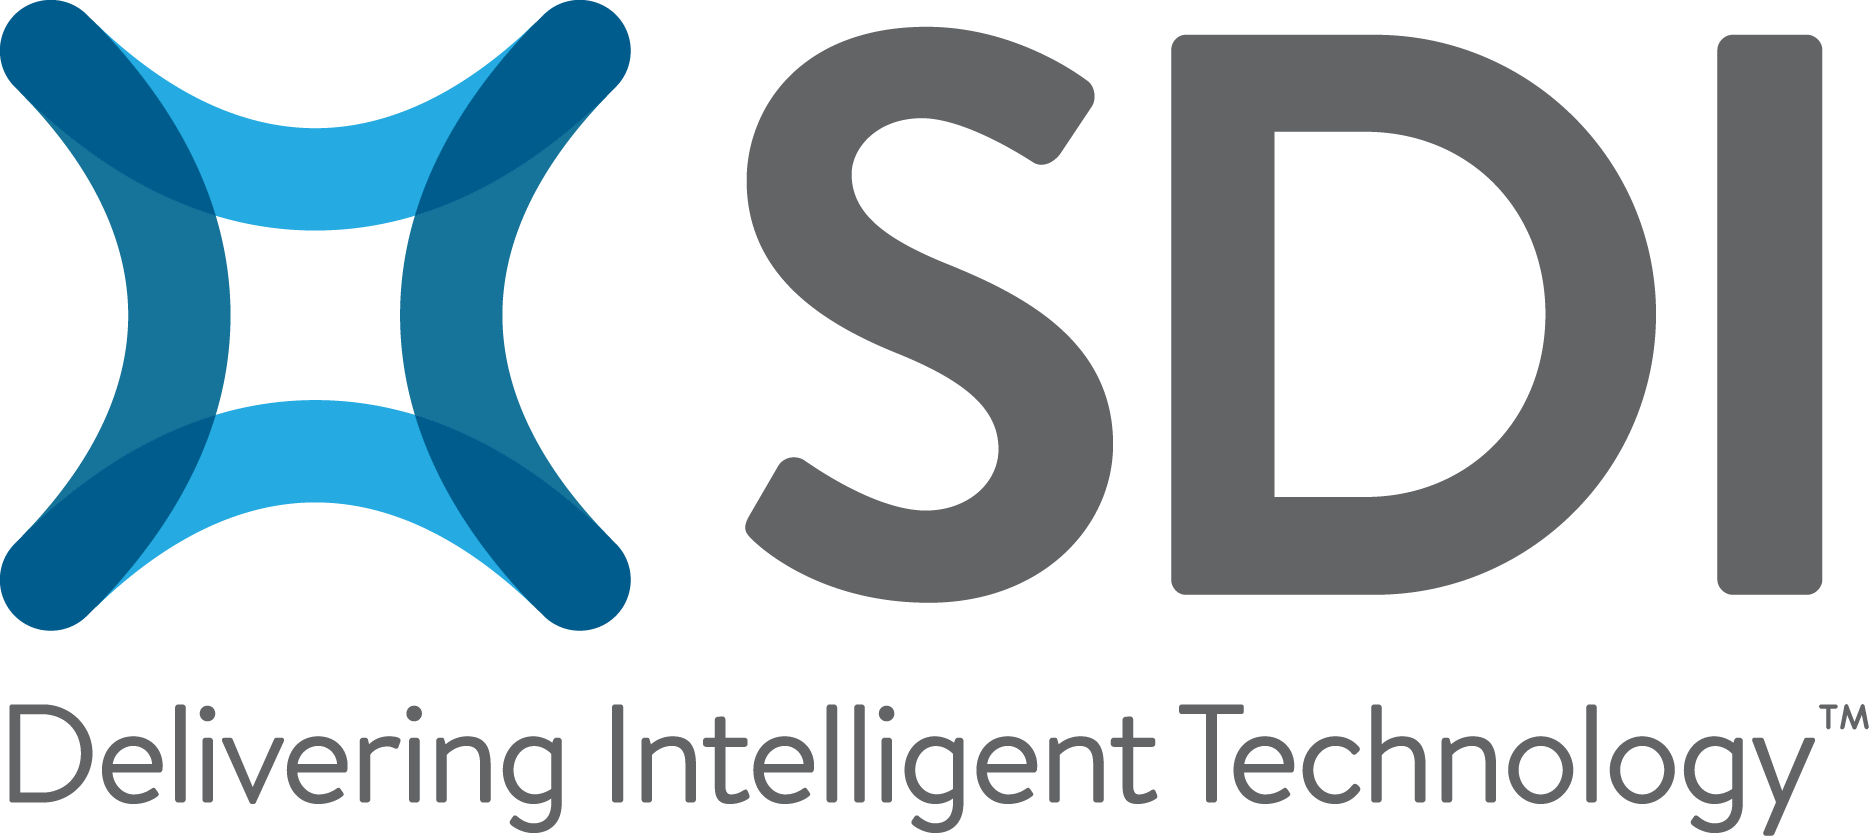 SDI Logo - File:SDI Official Logo.png - Wikimedia Commons